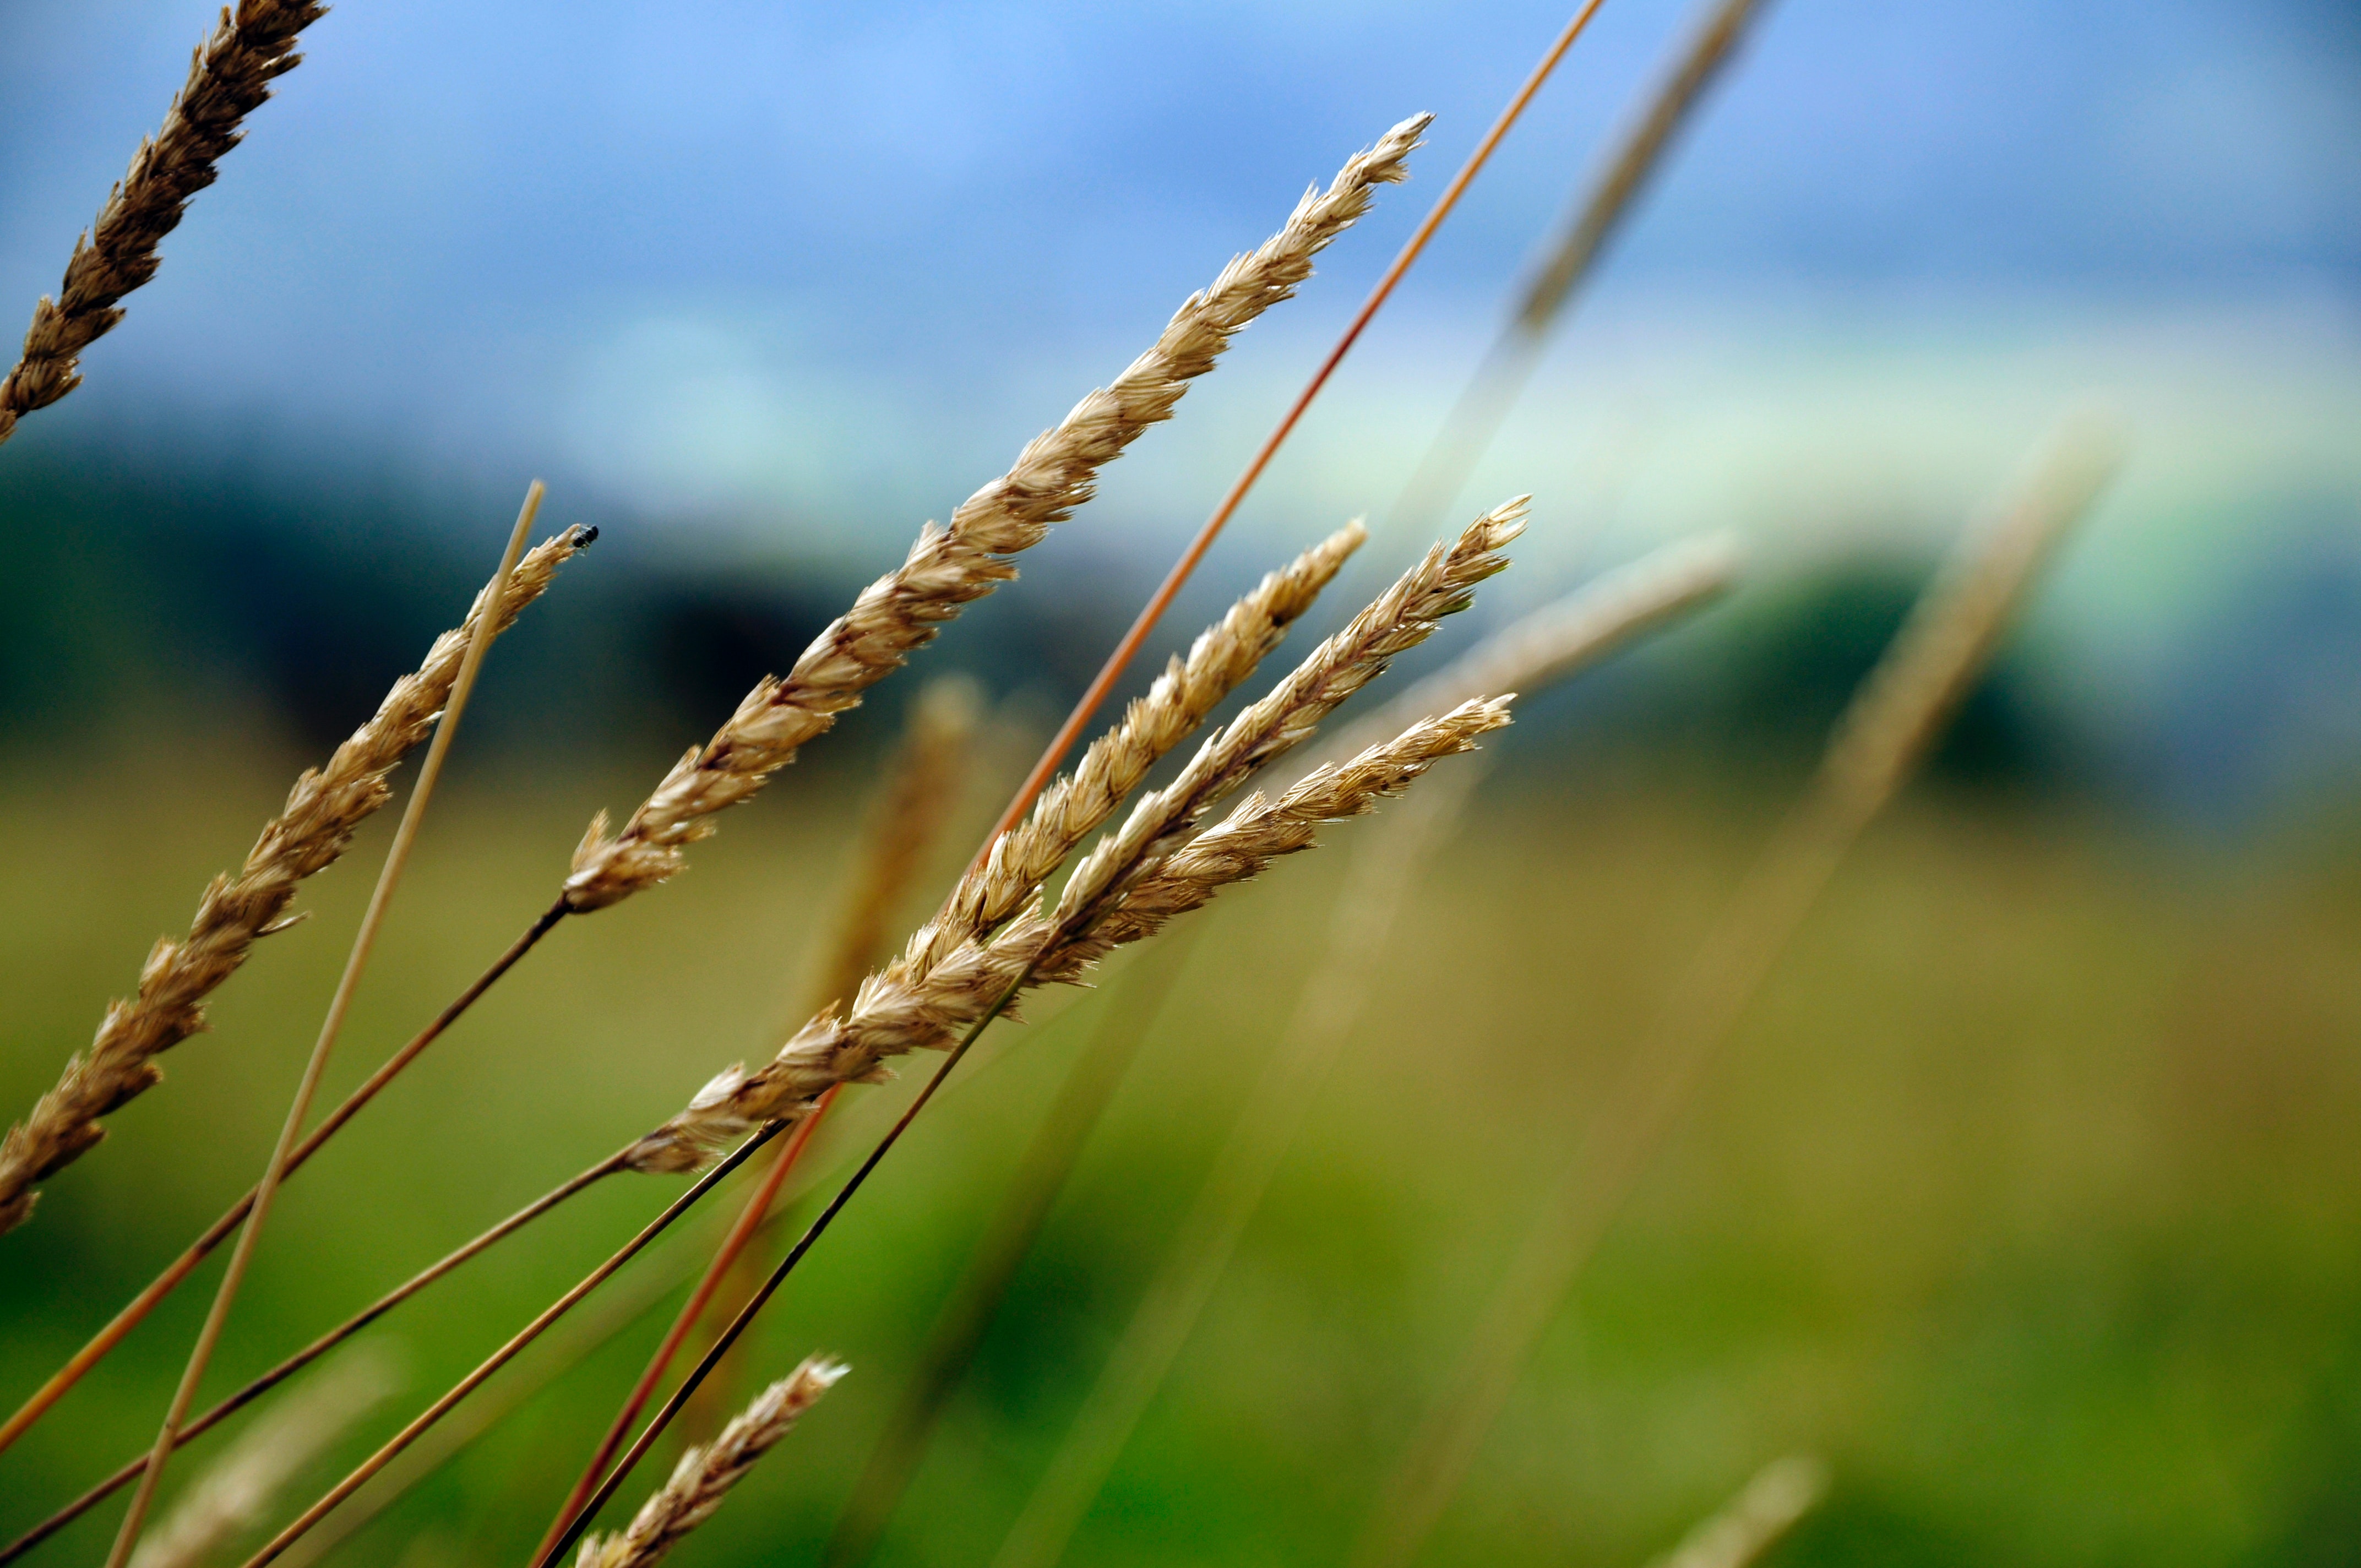 Beige weeds in a field of grass photo